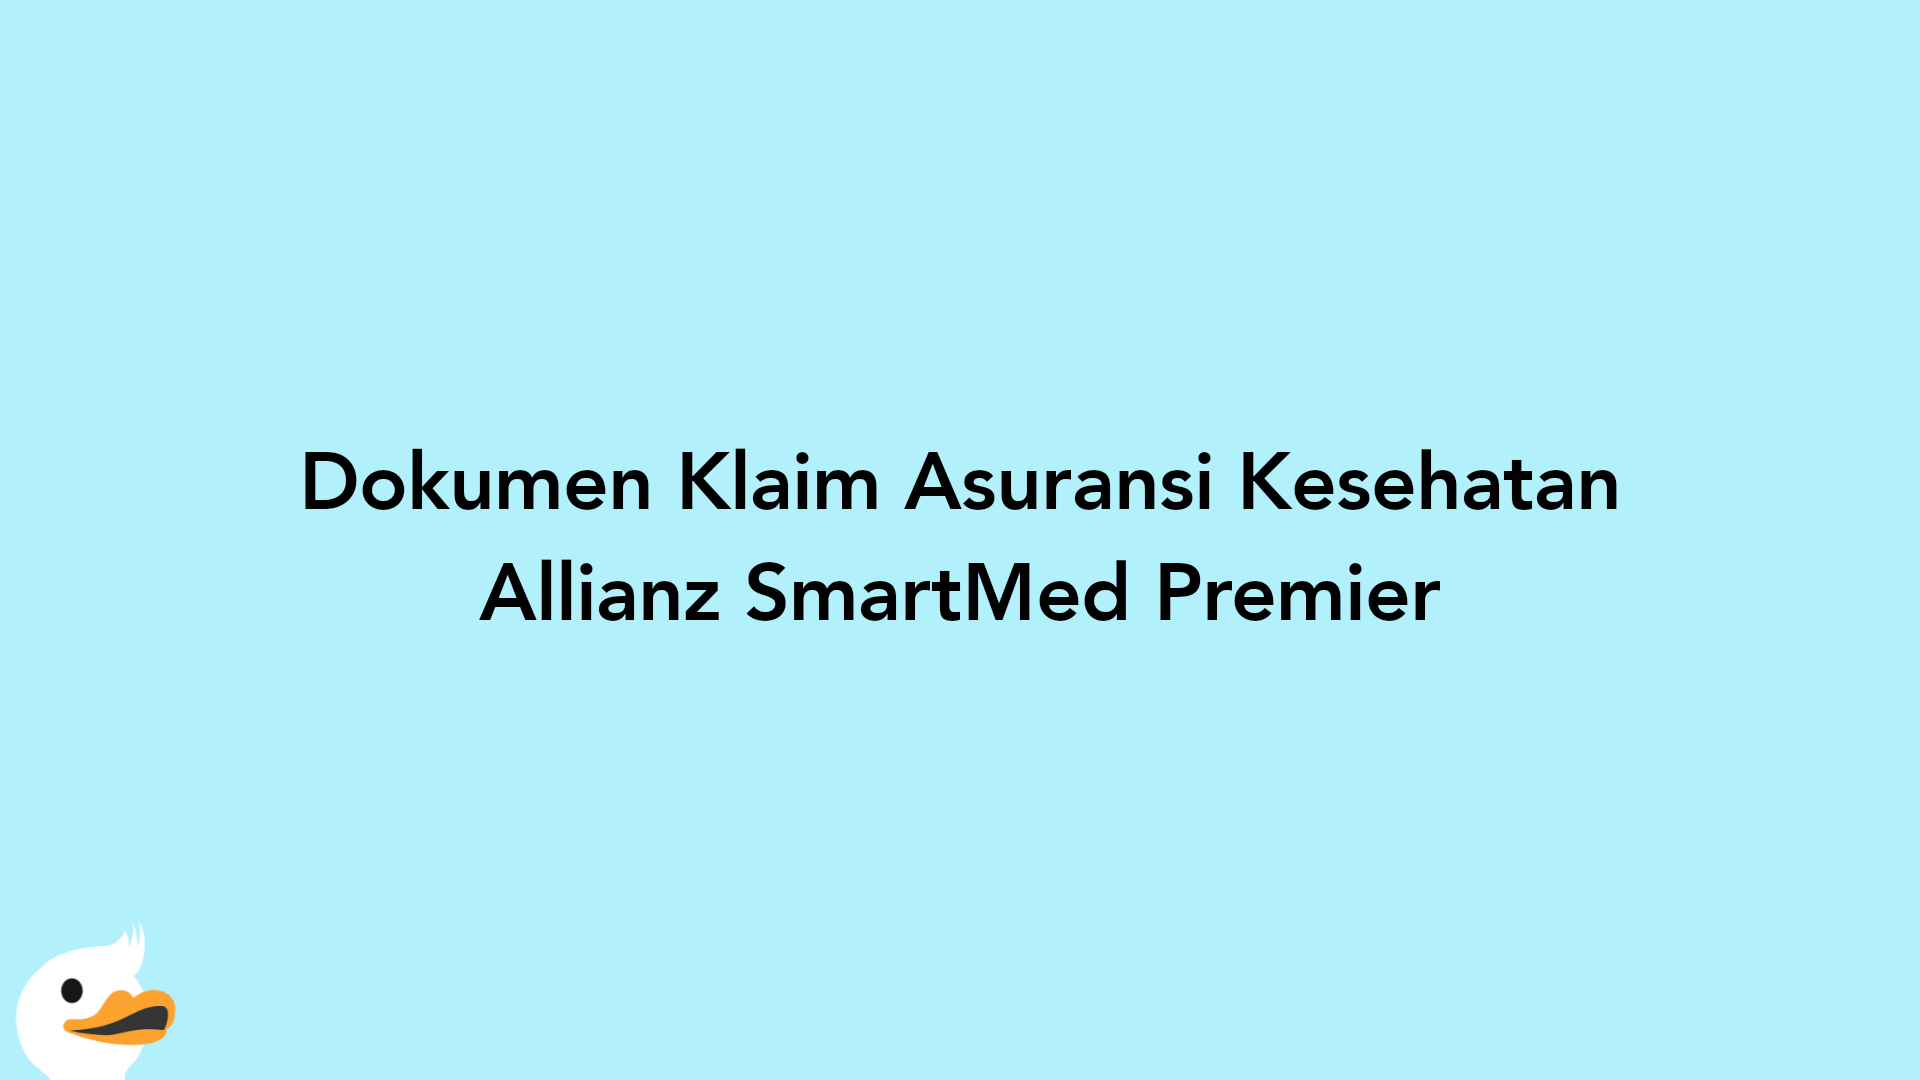 Dokumen Klaim Asuransi Kesehatan Allianz SmartMed Premier